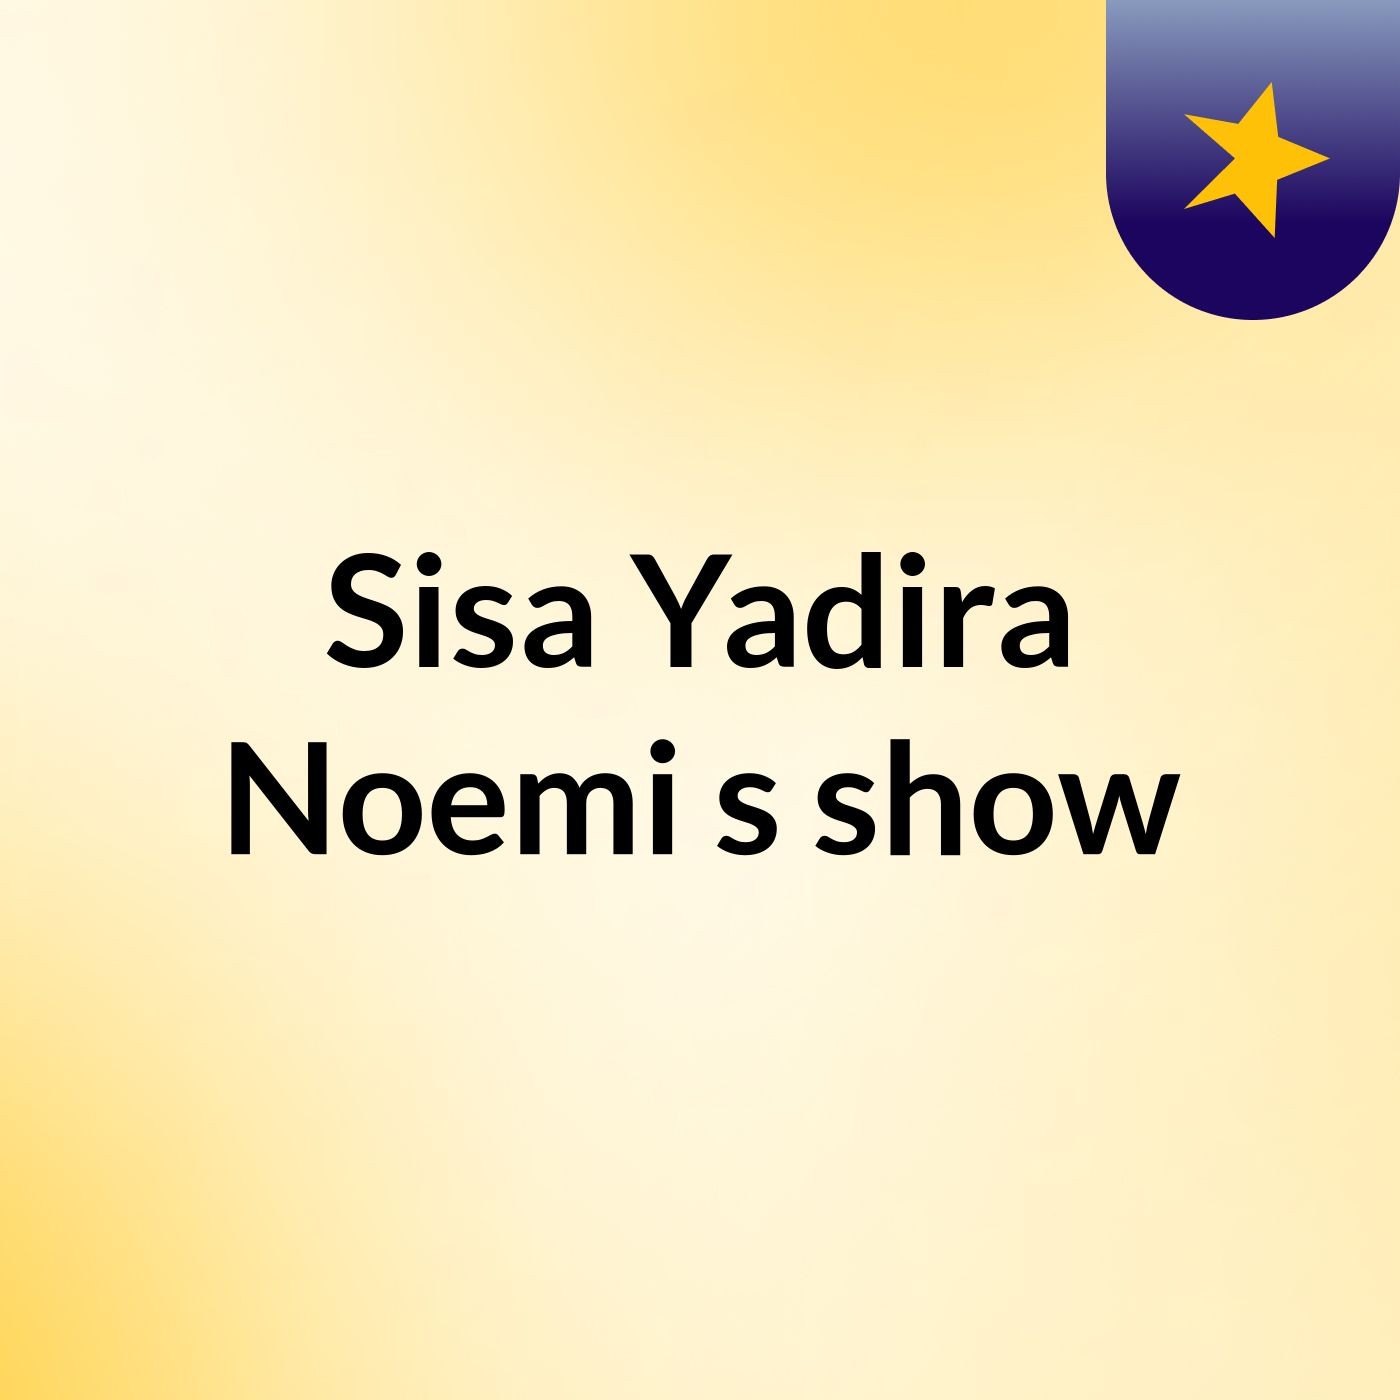 Sisa Yadira Noemi's show